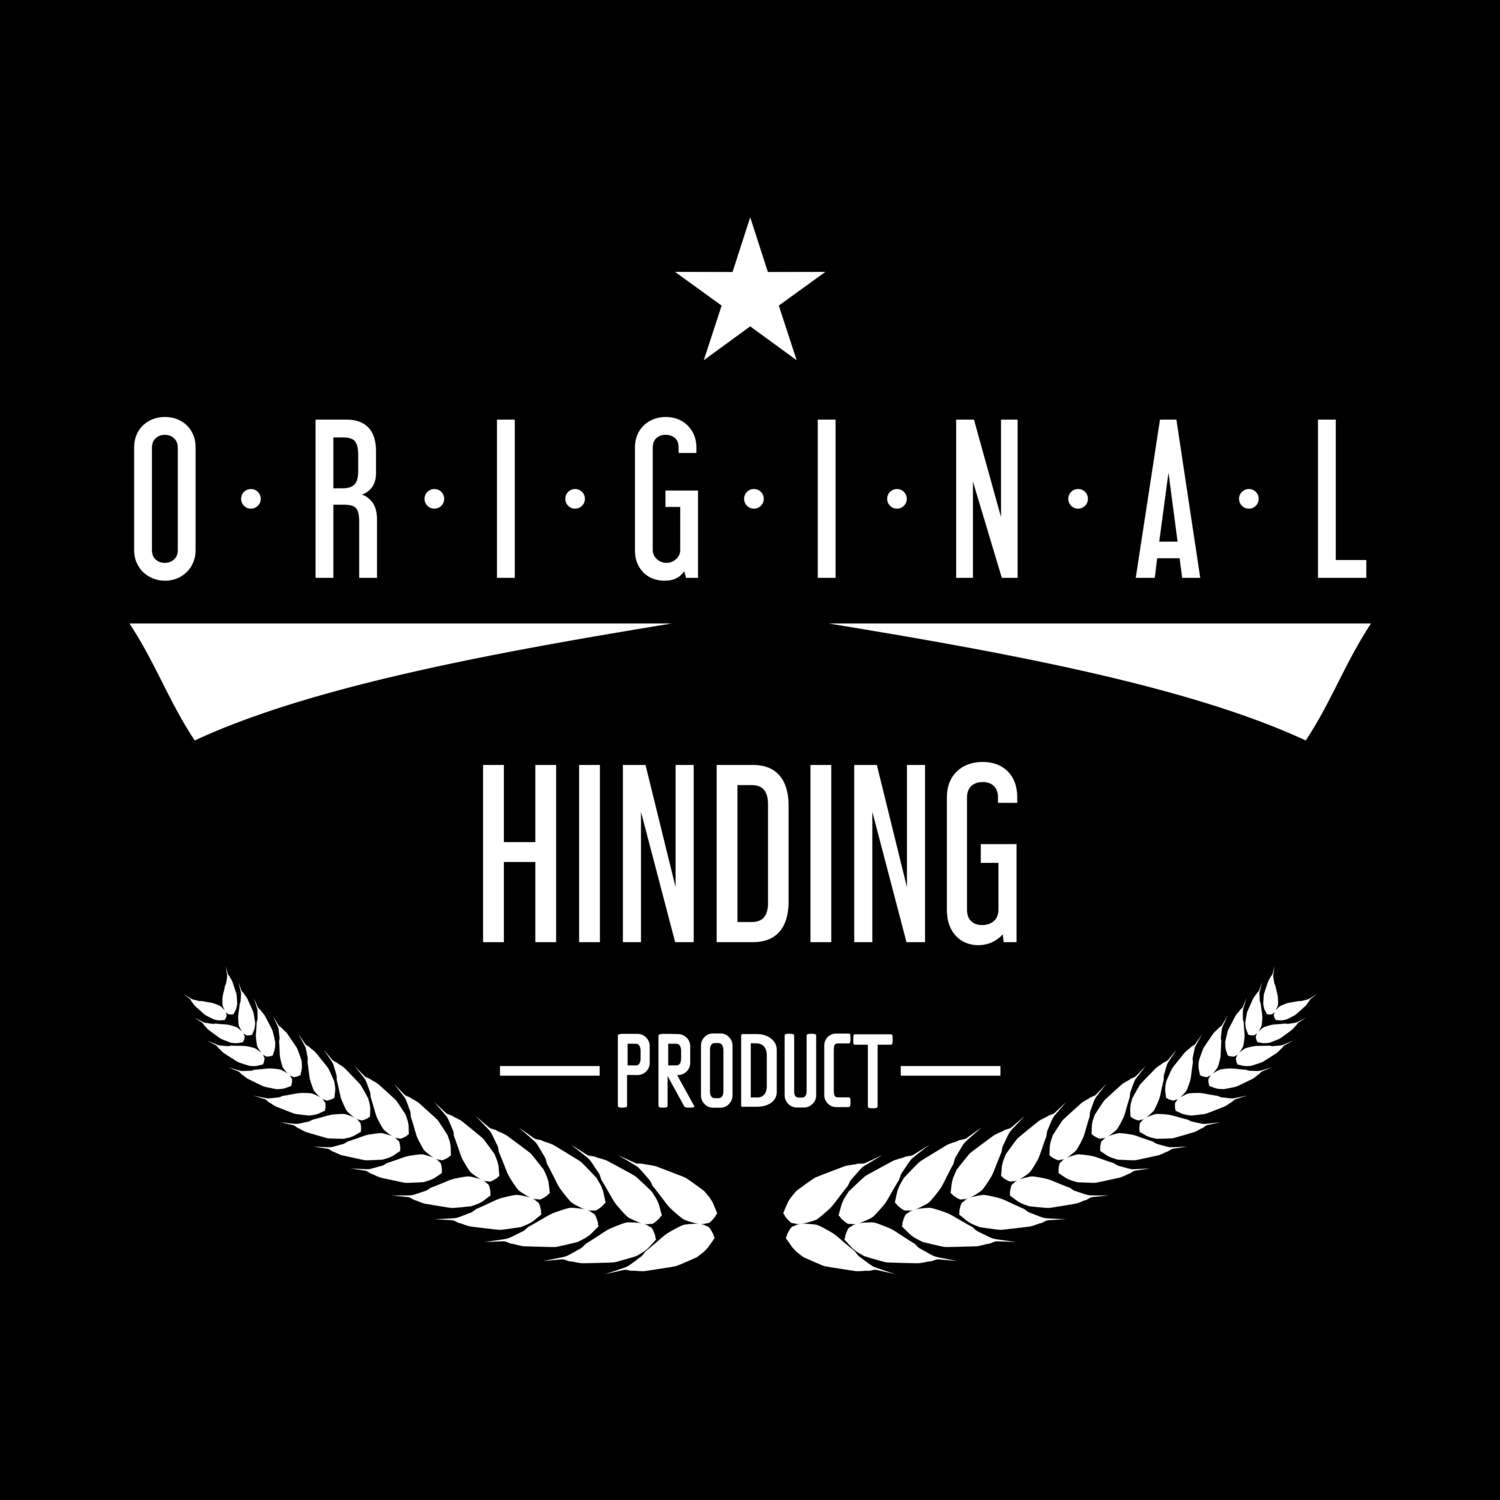 Hinding T-Shirt »Original Product«